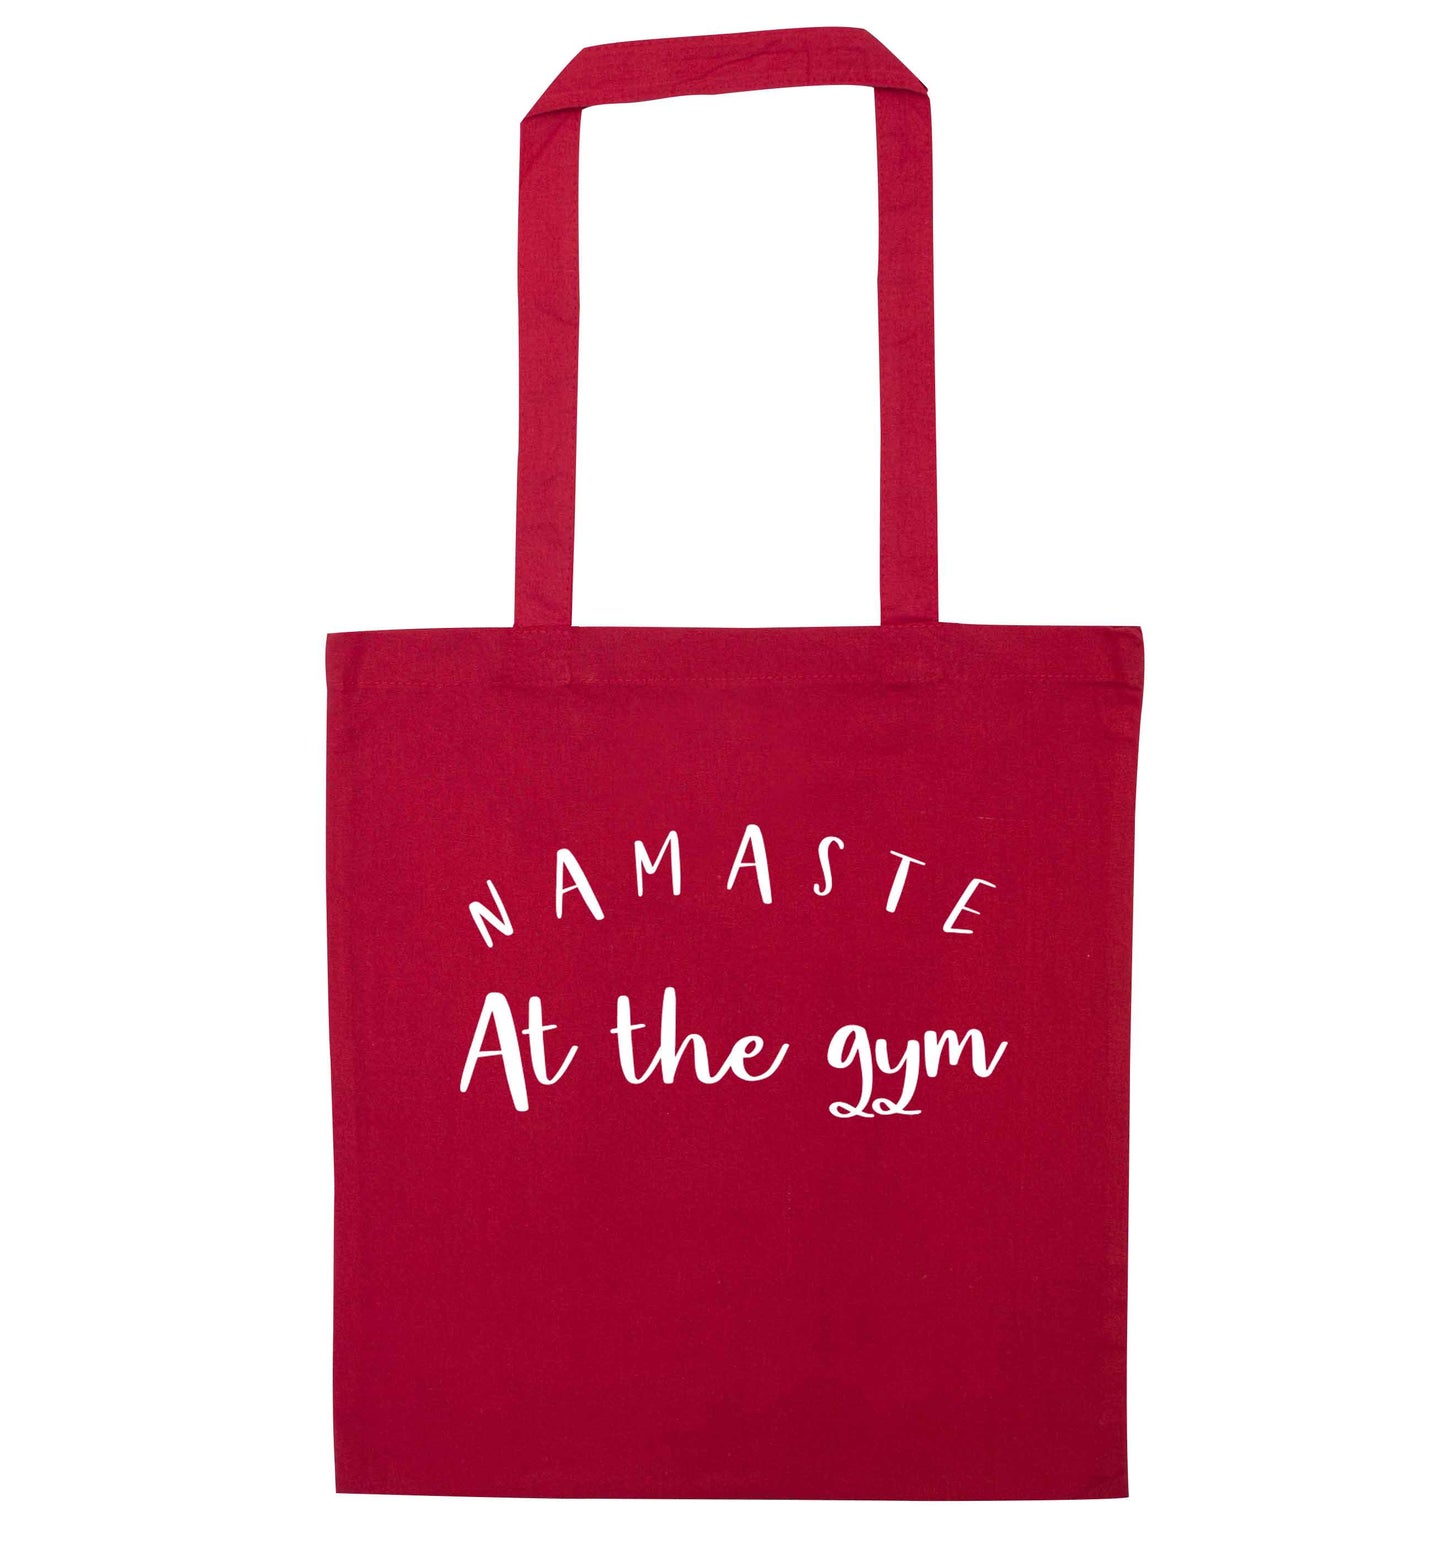 Namaste at the gym red tote bag